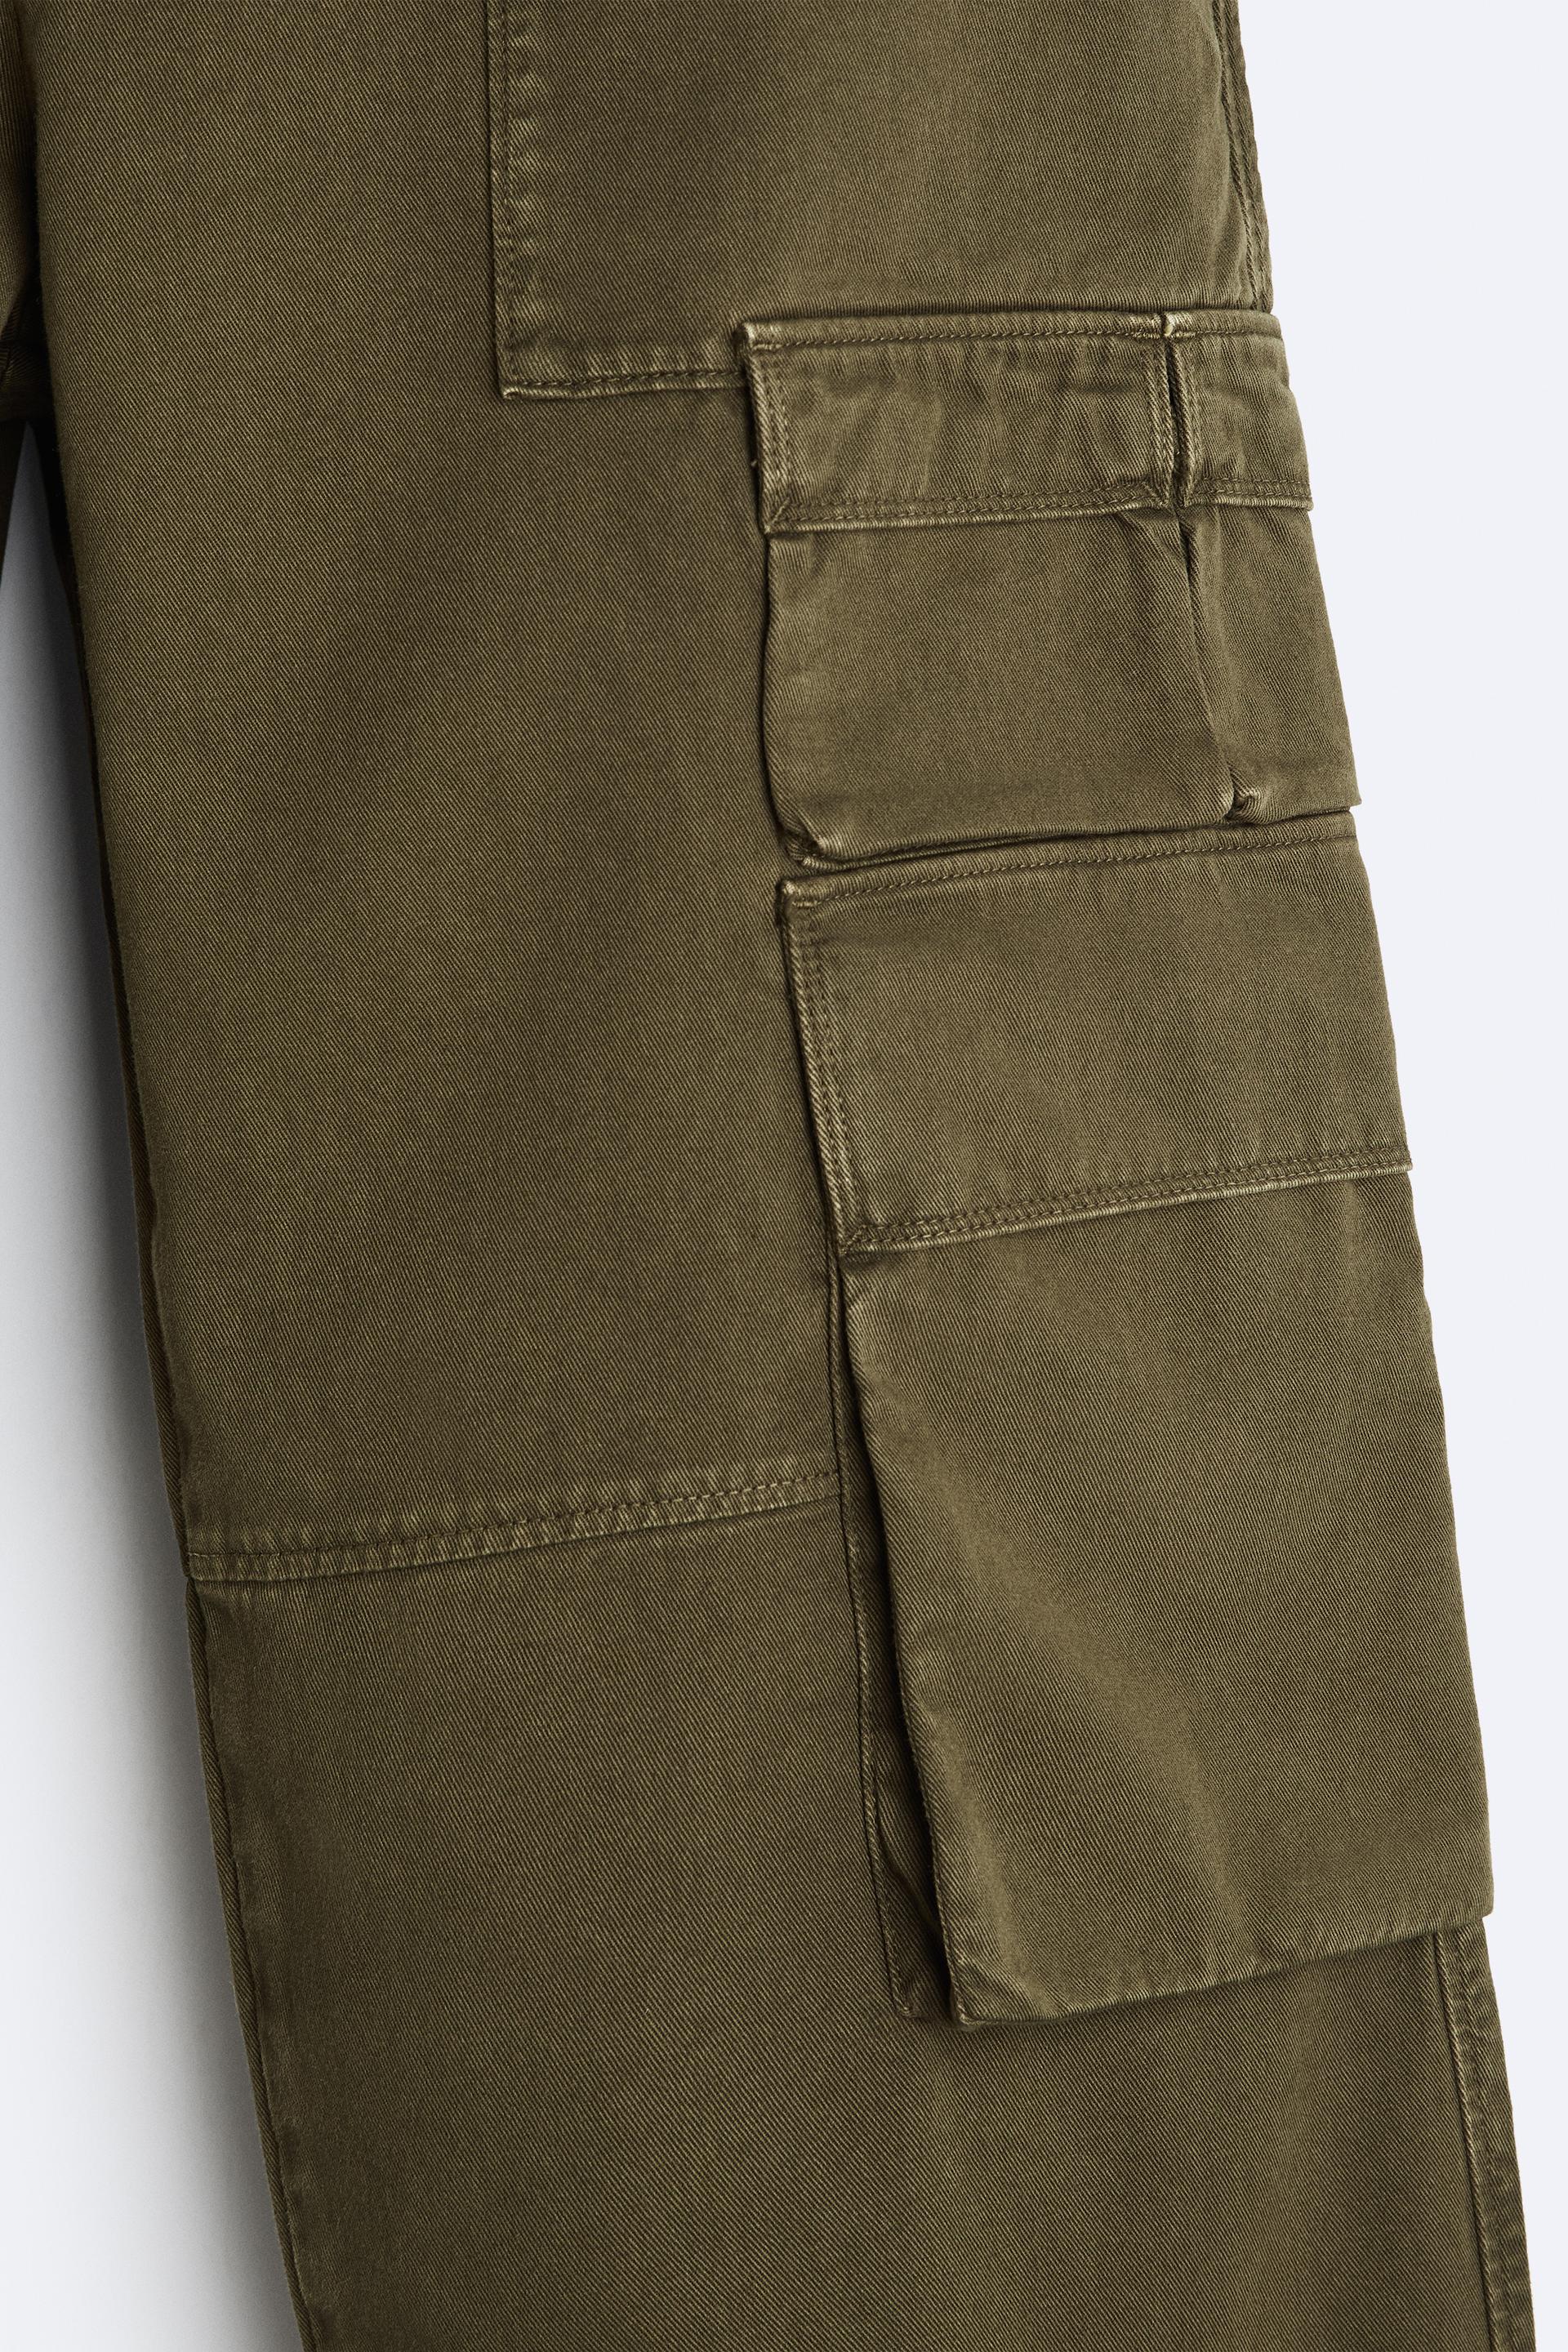 Zara Woman Premium Denim Collection Cargo Pants Zipper 6 (28x25) Faded  Black